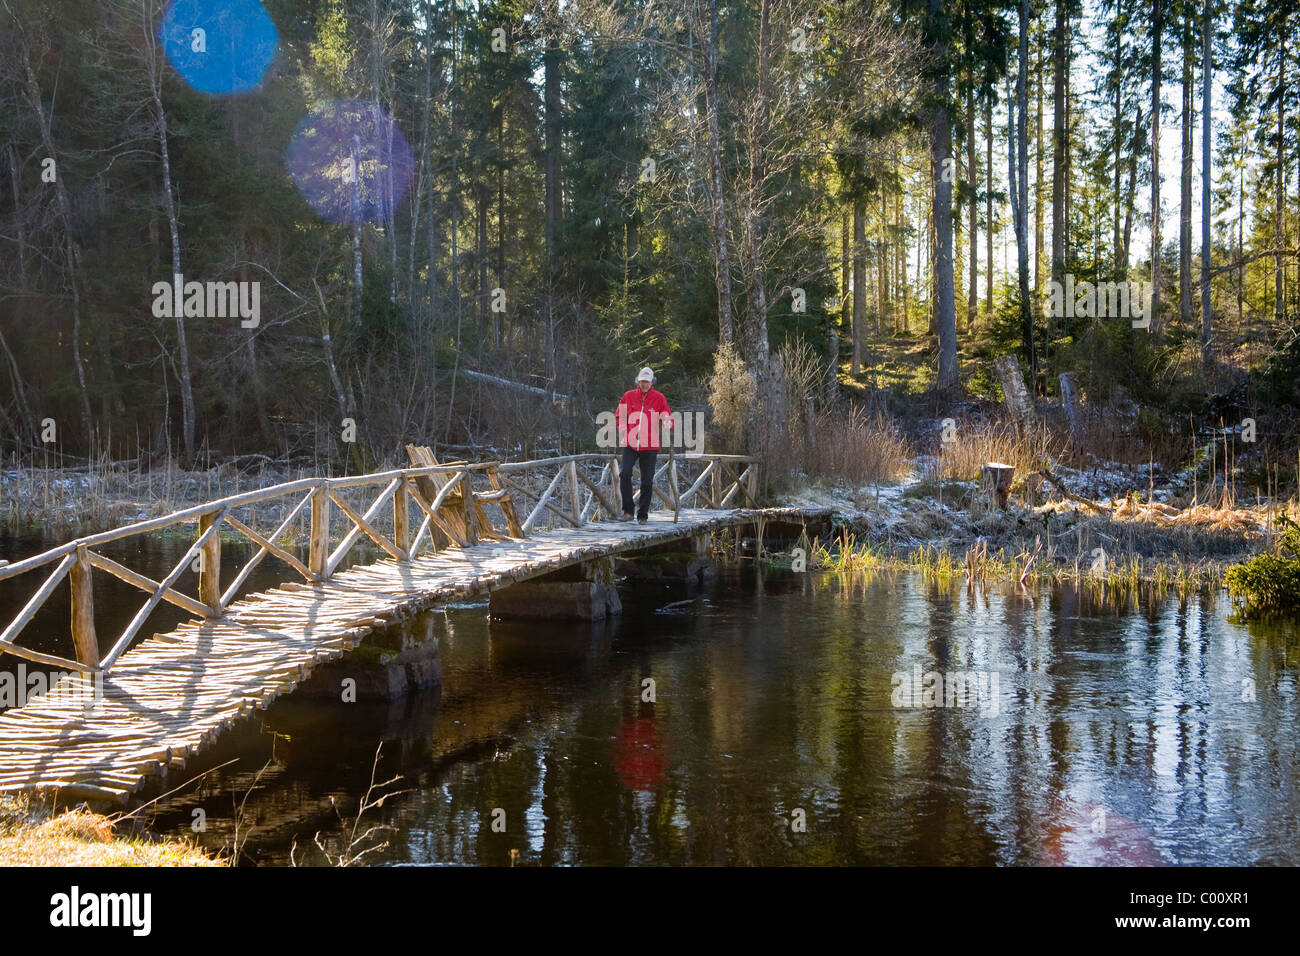 Man in red jacket walking on wooden bridge Stock Photo